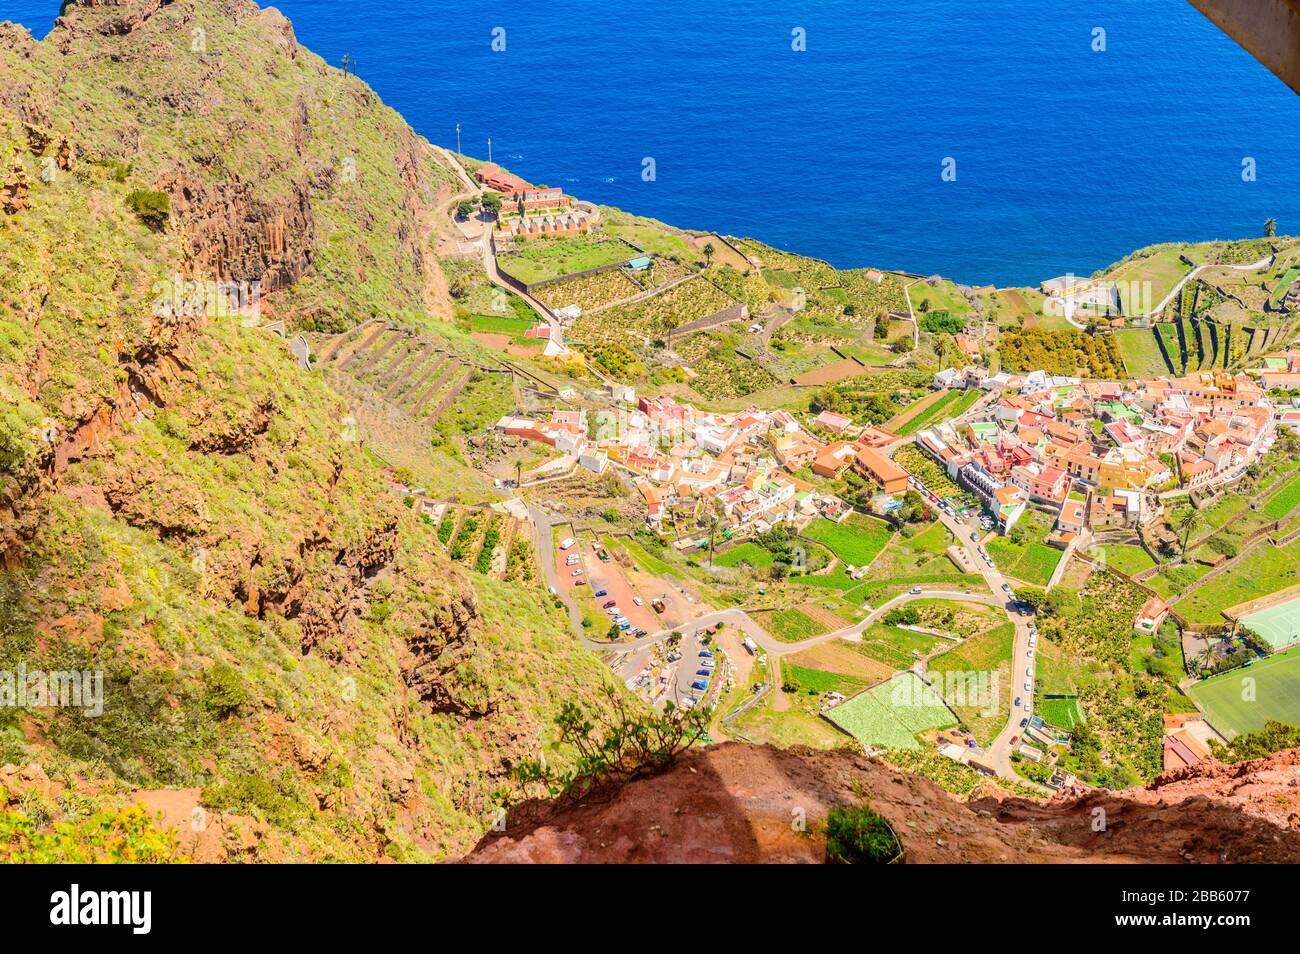 Views from the cliff of the Mirador de Abrante on the island of La Gomera. April 15, 2019. La Gomera, Santa Cruz de Tenerife Spain Africa. Travel Tour Stock Photo